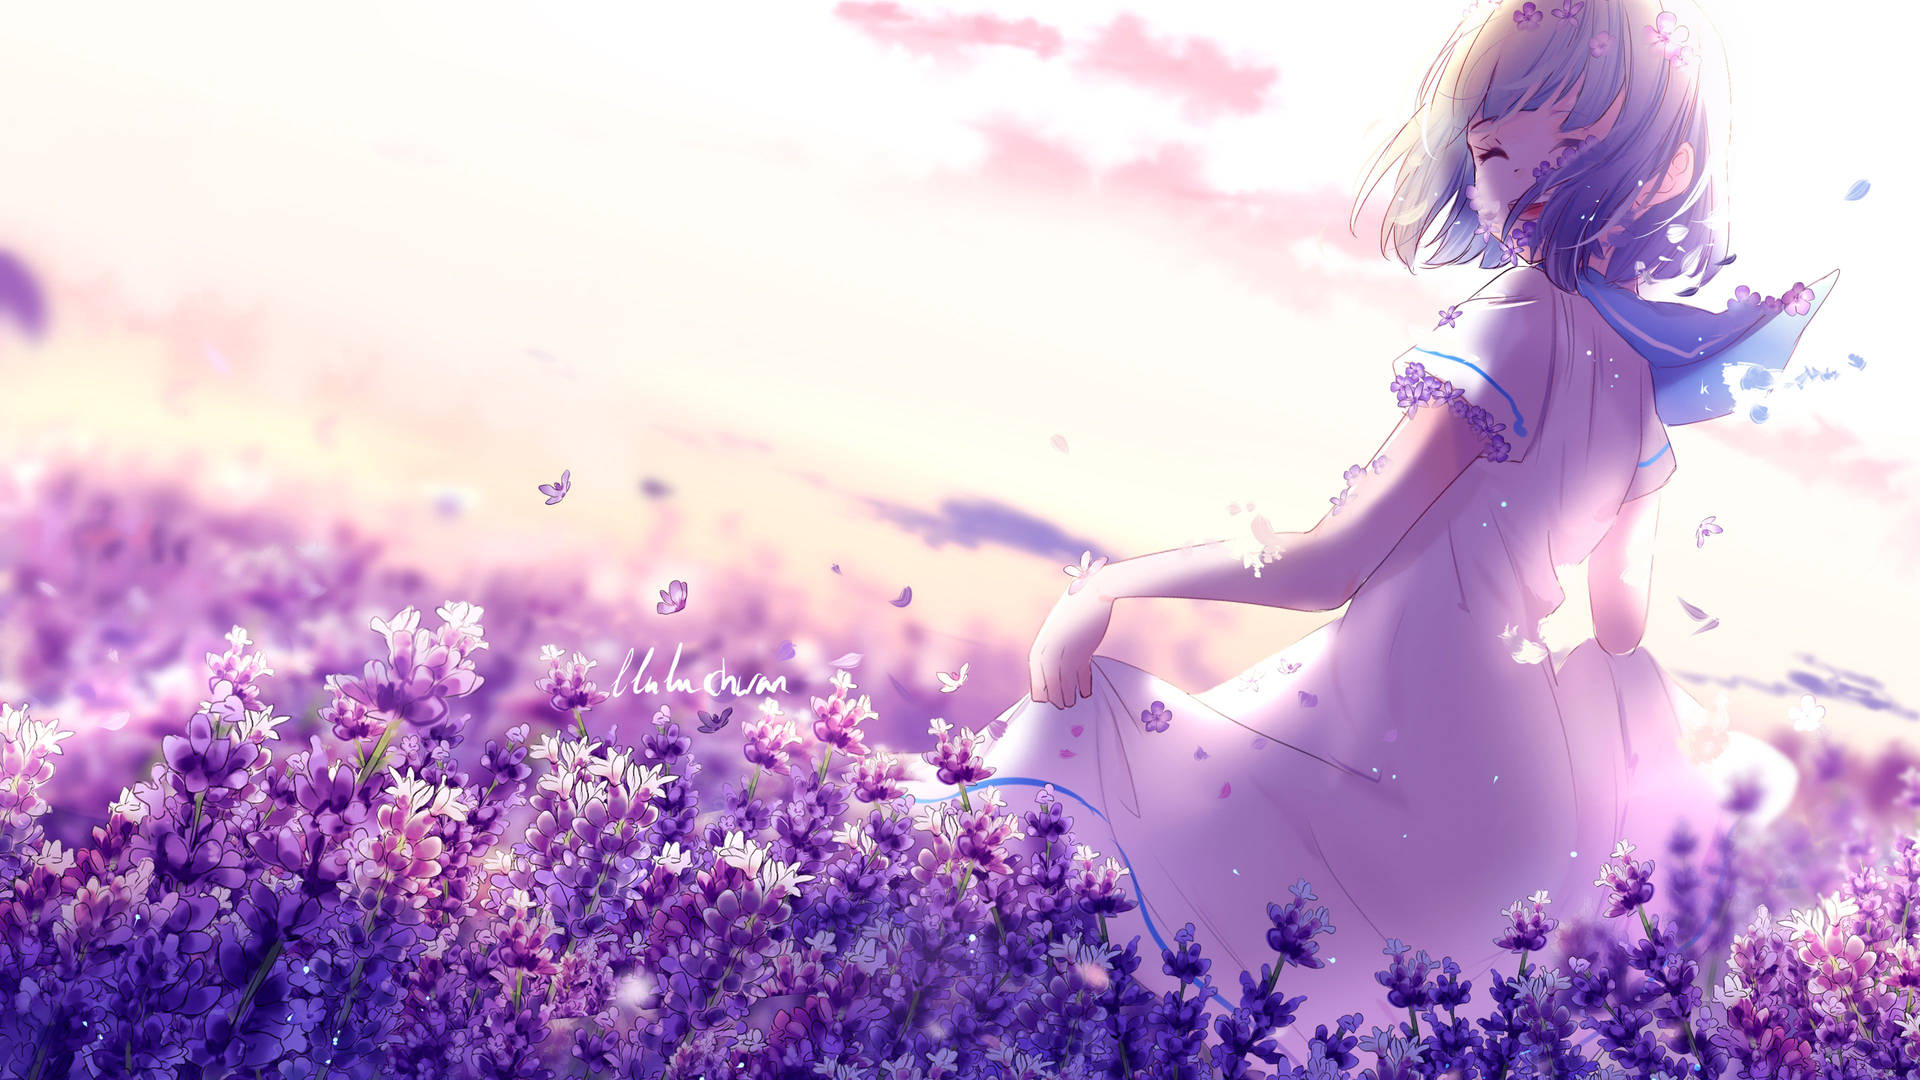 Anime Girl And Purple Flower Field Wallpaper